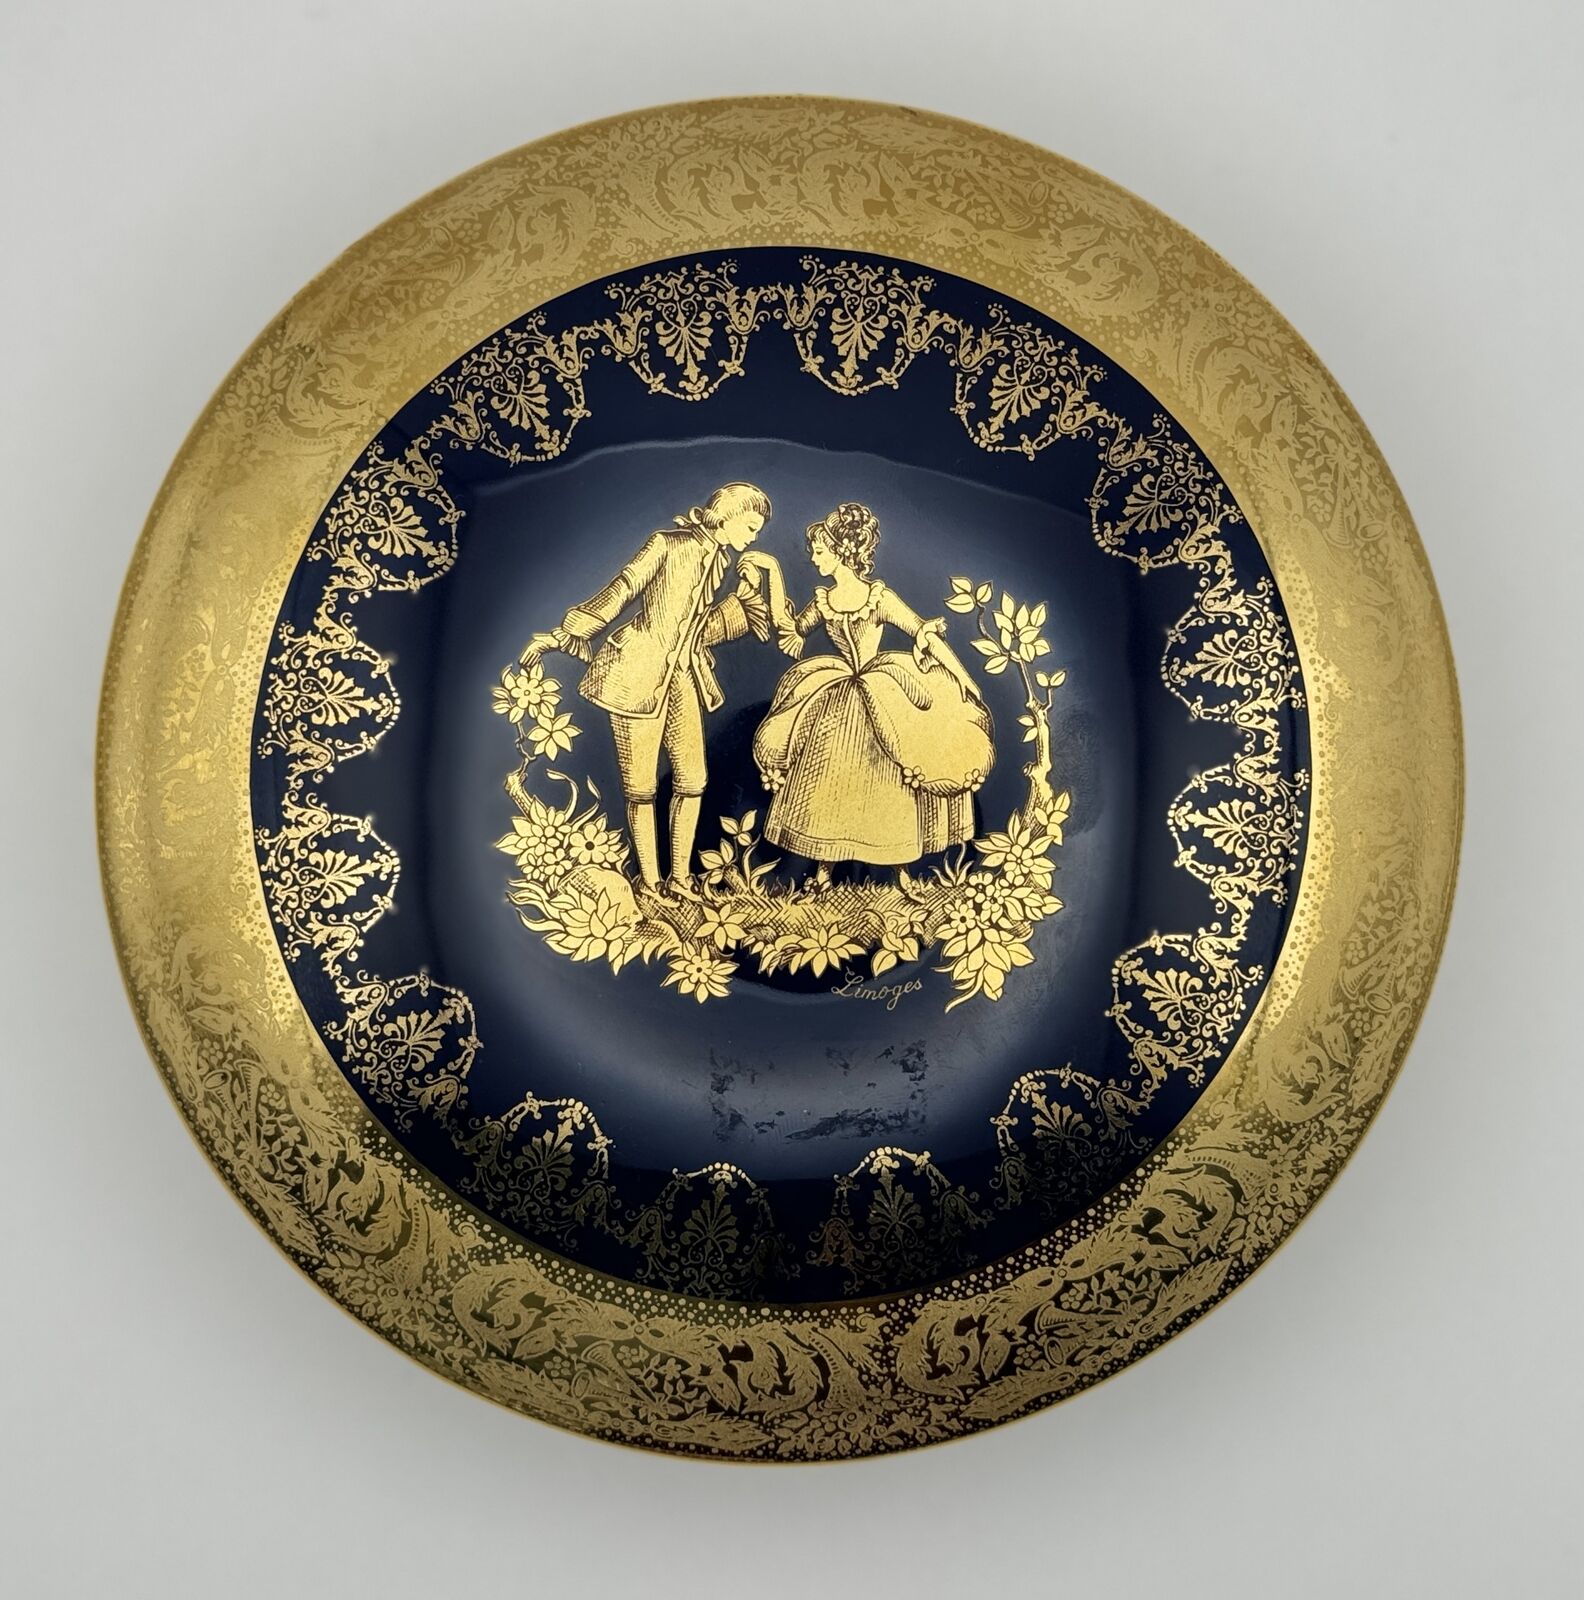 Exquisite Limoges France Porcelain Trinket Box with Gold and Blue Design